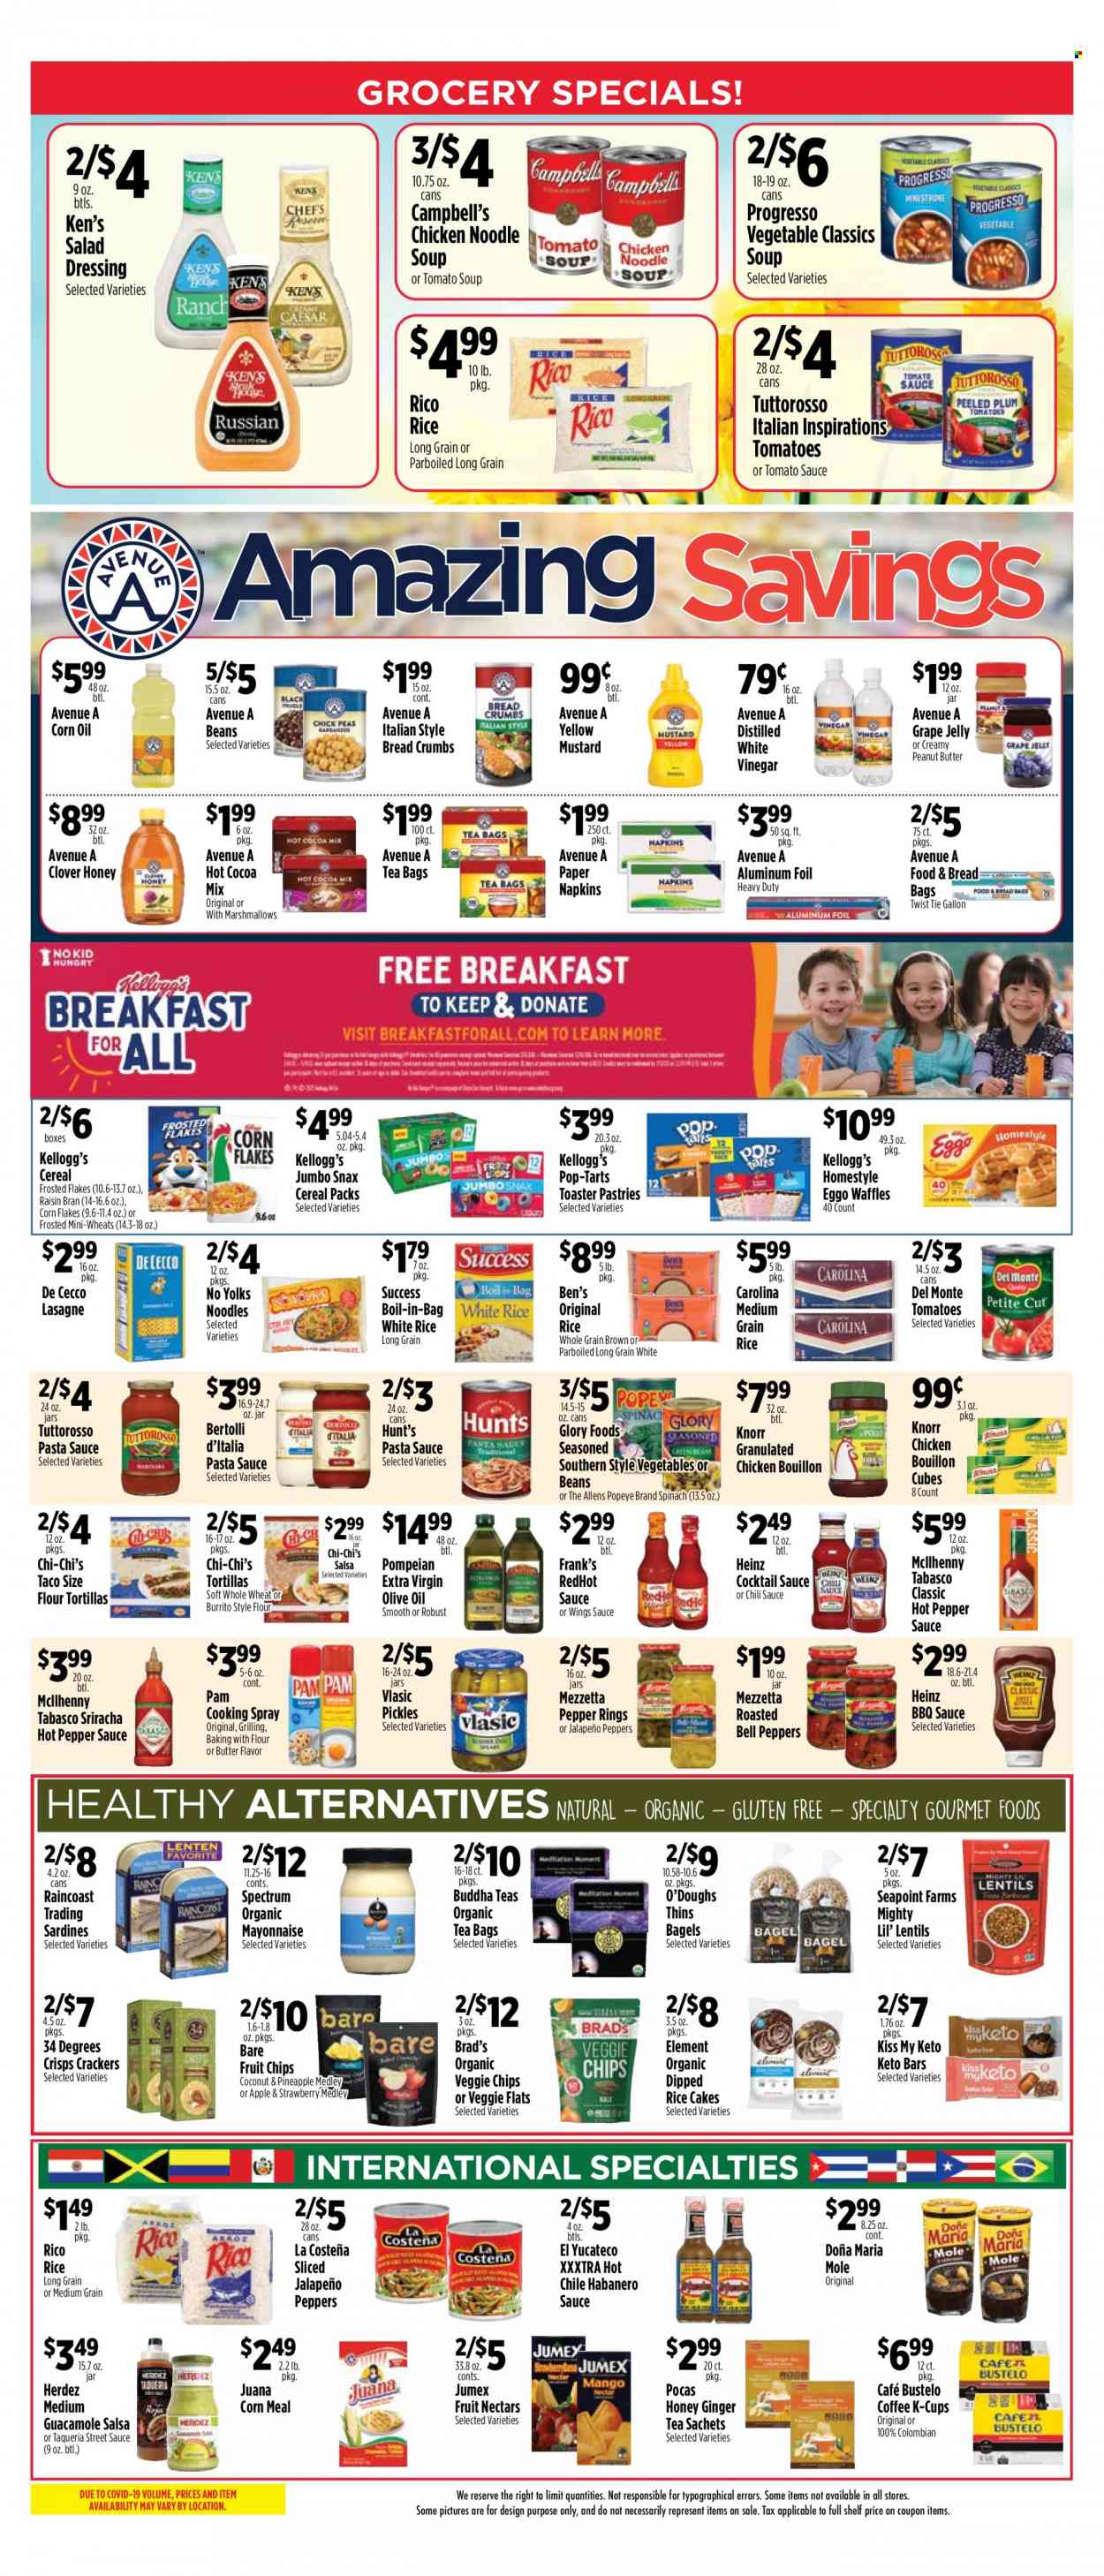 Pioneer Supermarkets ad  - 03.26.2023 - 04.01.2023.